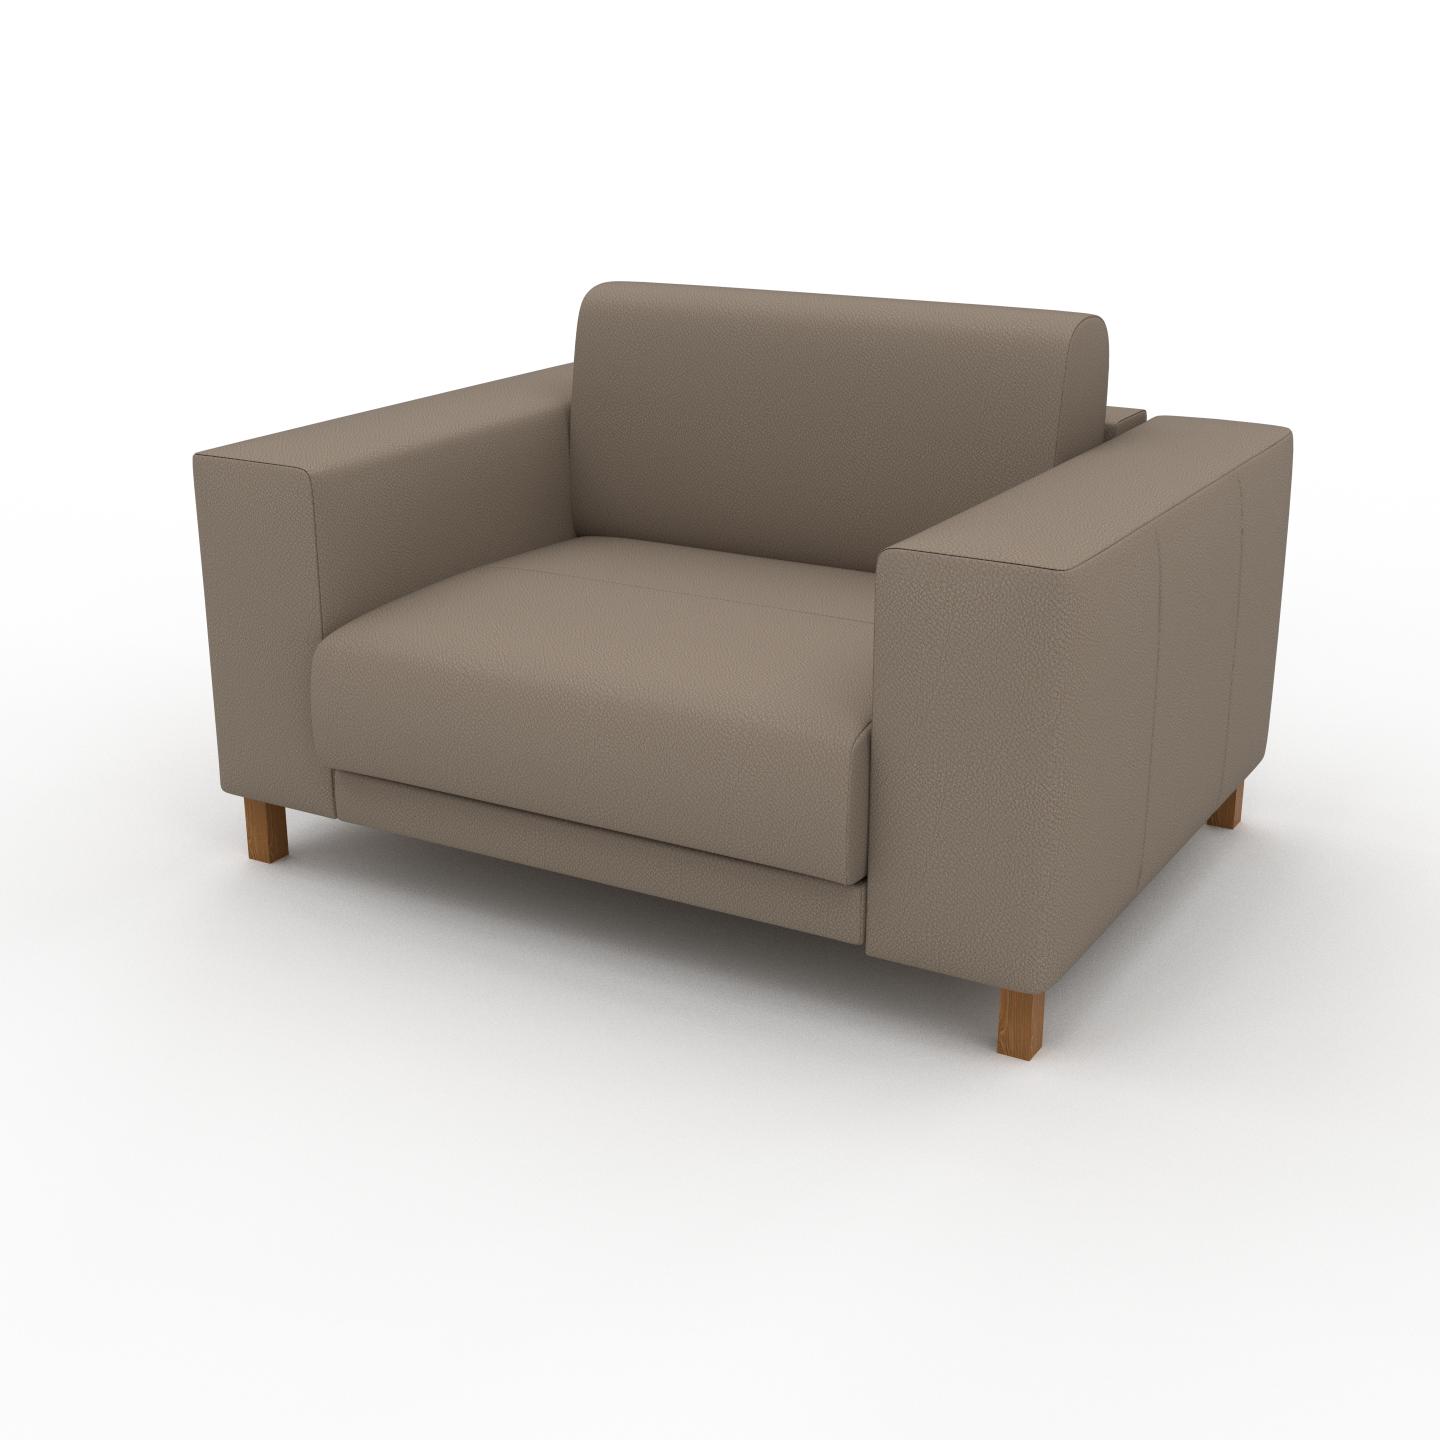 MYCS Sessel Taupegrau - Eleganter Sessel: Hochwertige Qualität, einzigartiges Design - 128 x 75 x 98 cm, Individuell konfigurierbar